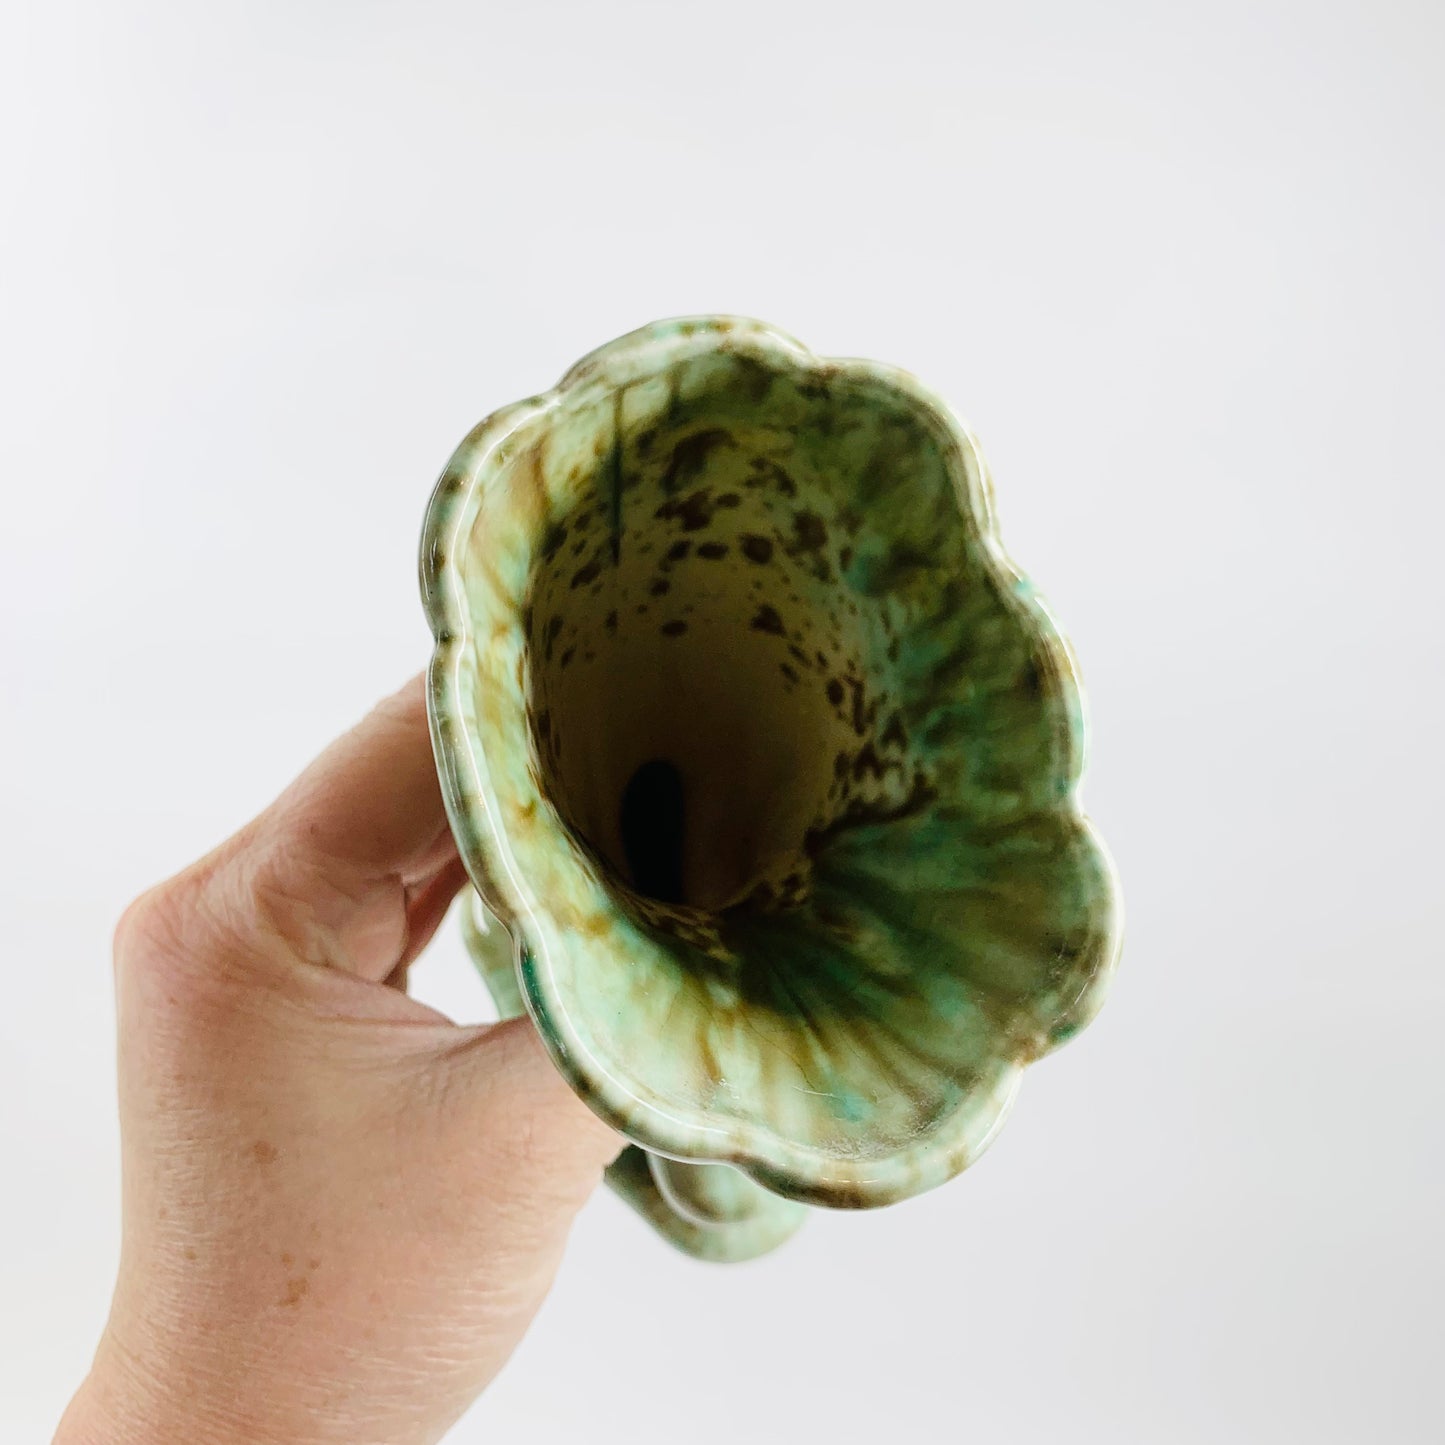 Midcentury Pates Australia green drip glaze pottery vase